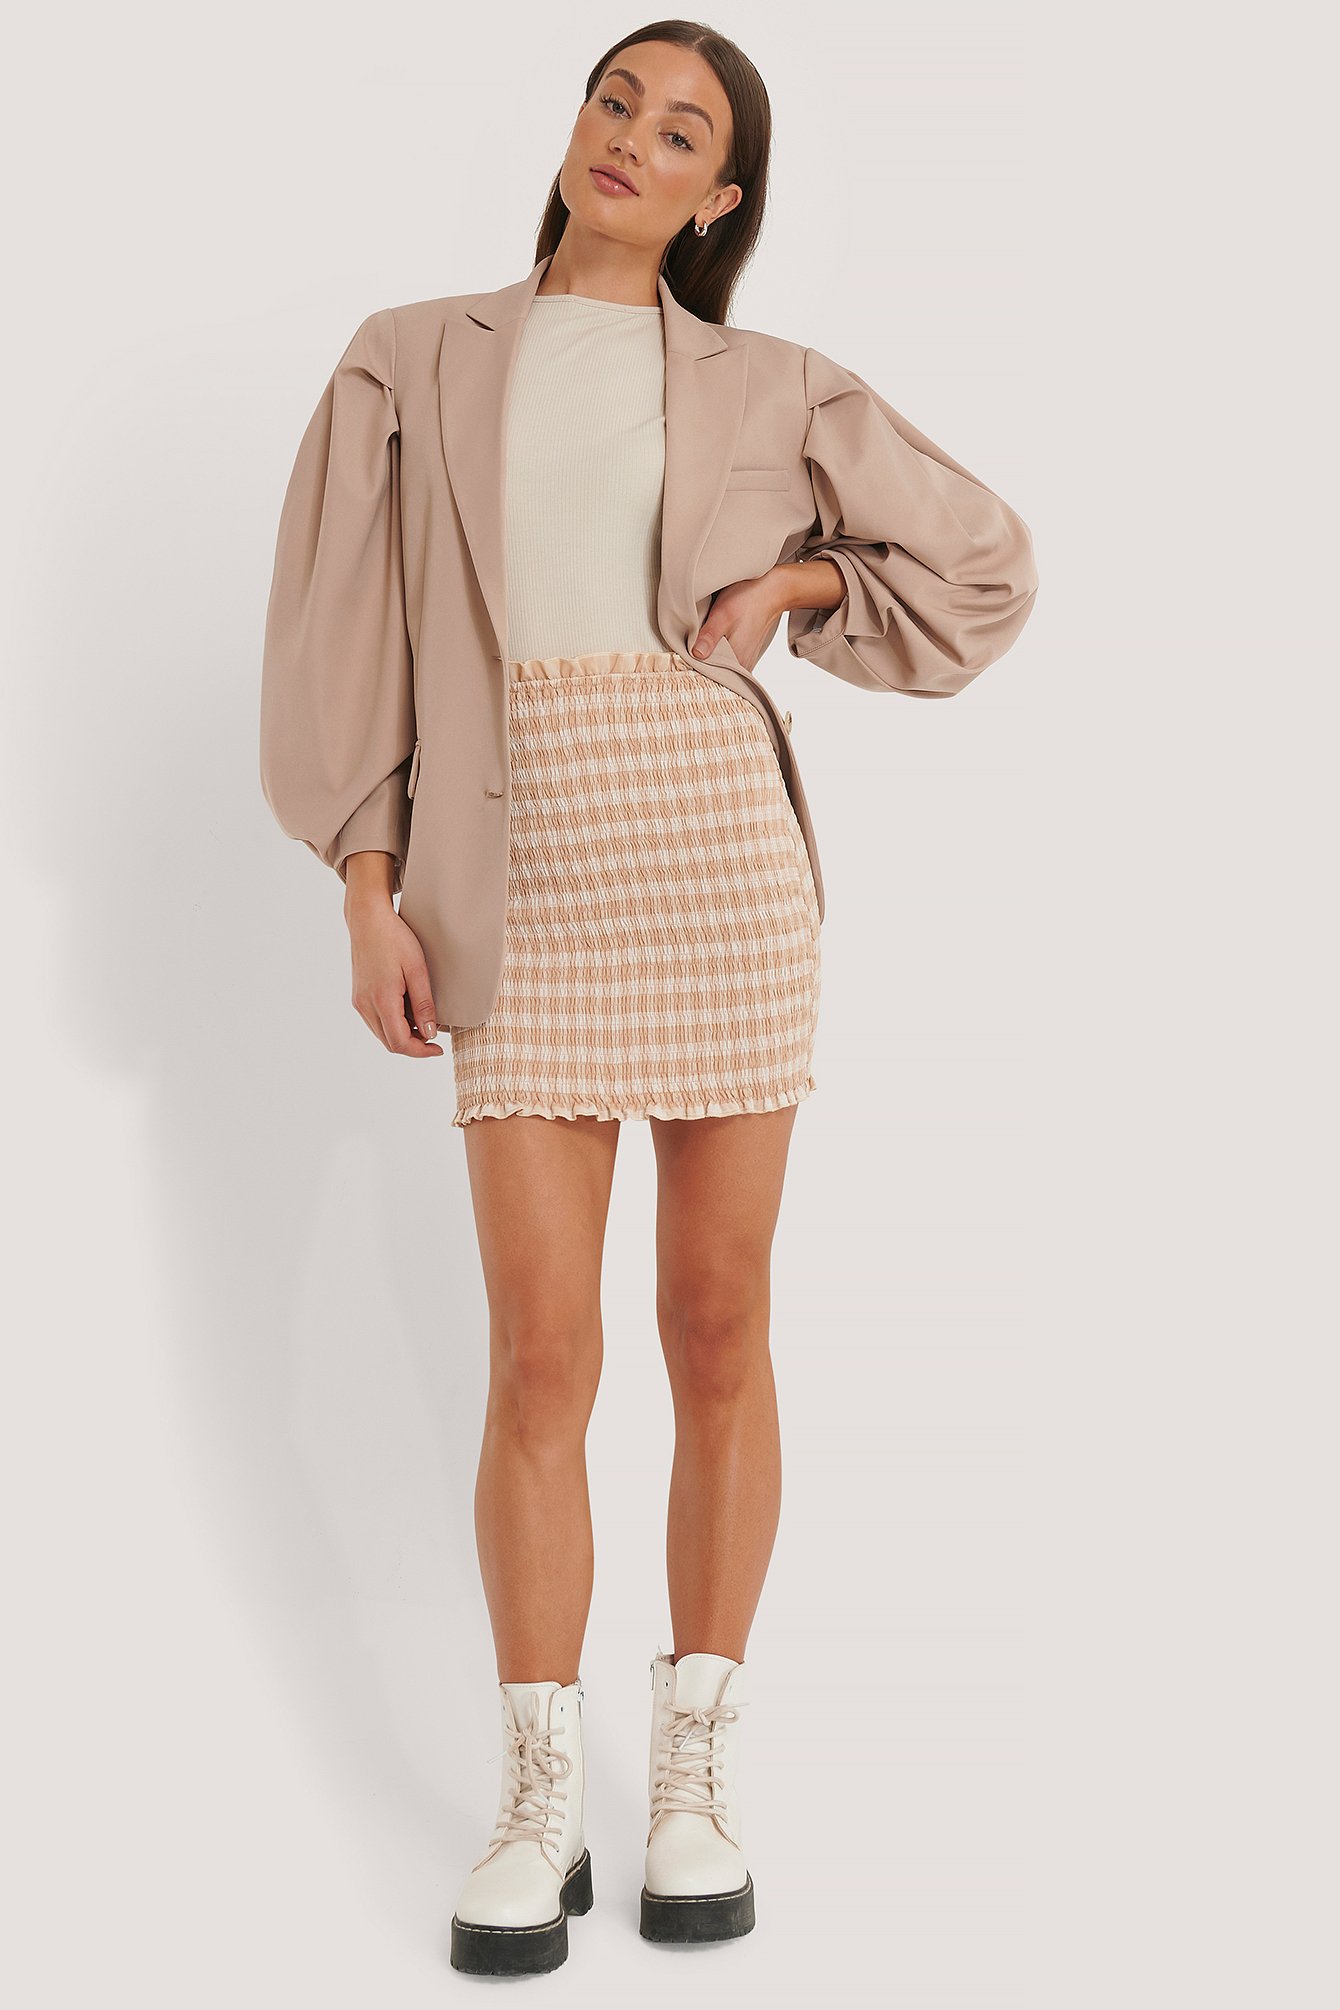 Smocked Plaid Mini Skirt Outfit.